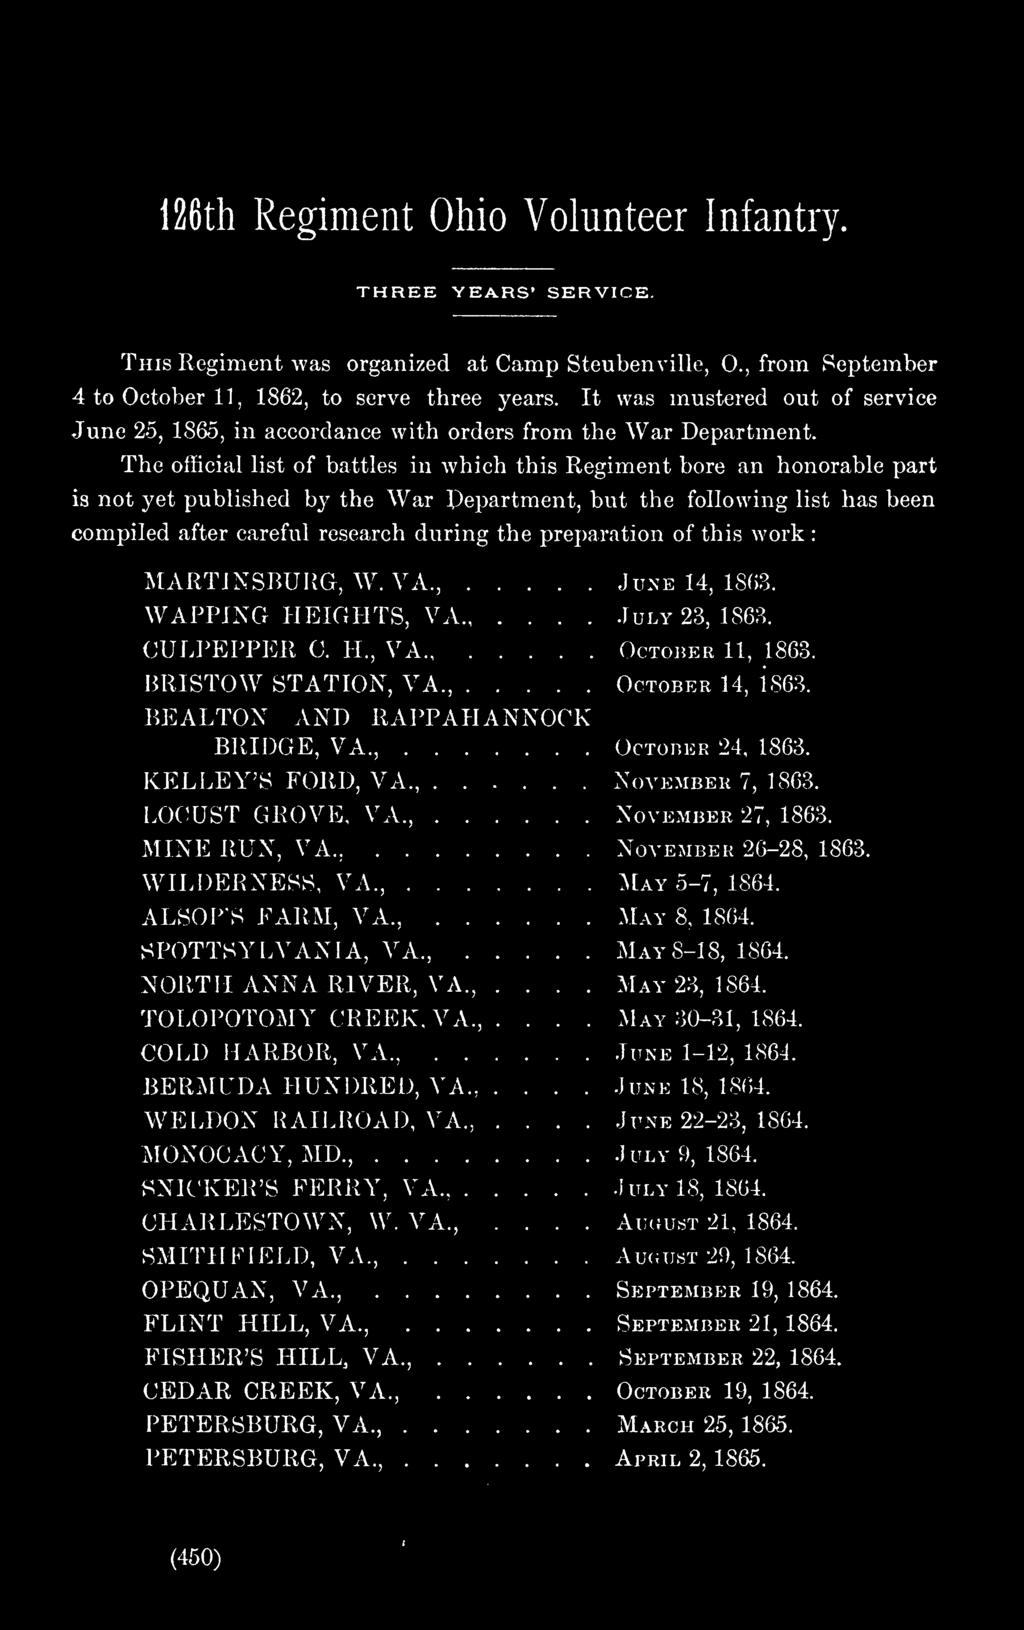 BEALTON AND RAPPAHANNOCK BRIDGE, VA.,........ OCTOBER 24. 1863. KELLEY S FORD, VA... NOVEMBER 7, 1863. LOCUST GROVE, VA.,... NOVEMBER 27, 1863. MINE RUN, VA. ;... NOVEMBER 26-28, 1863. WILDERNESS, VA.